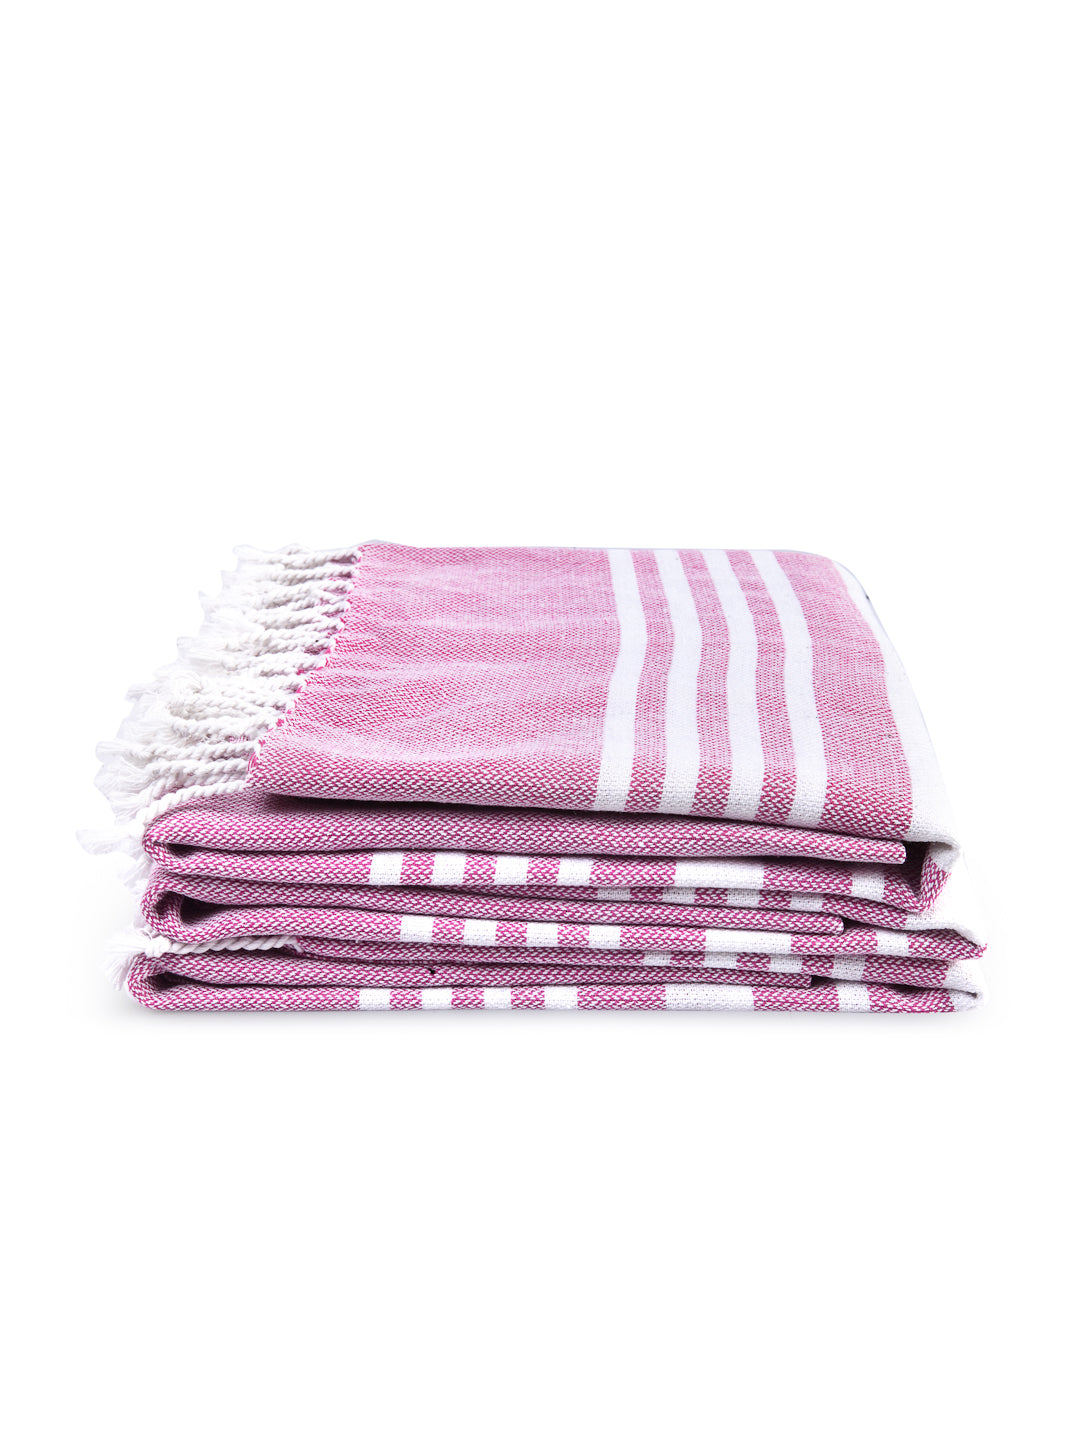 KLOTTHE Set of 3 Pink Cotton Striped Bath Towels (150X75 cm)